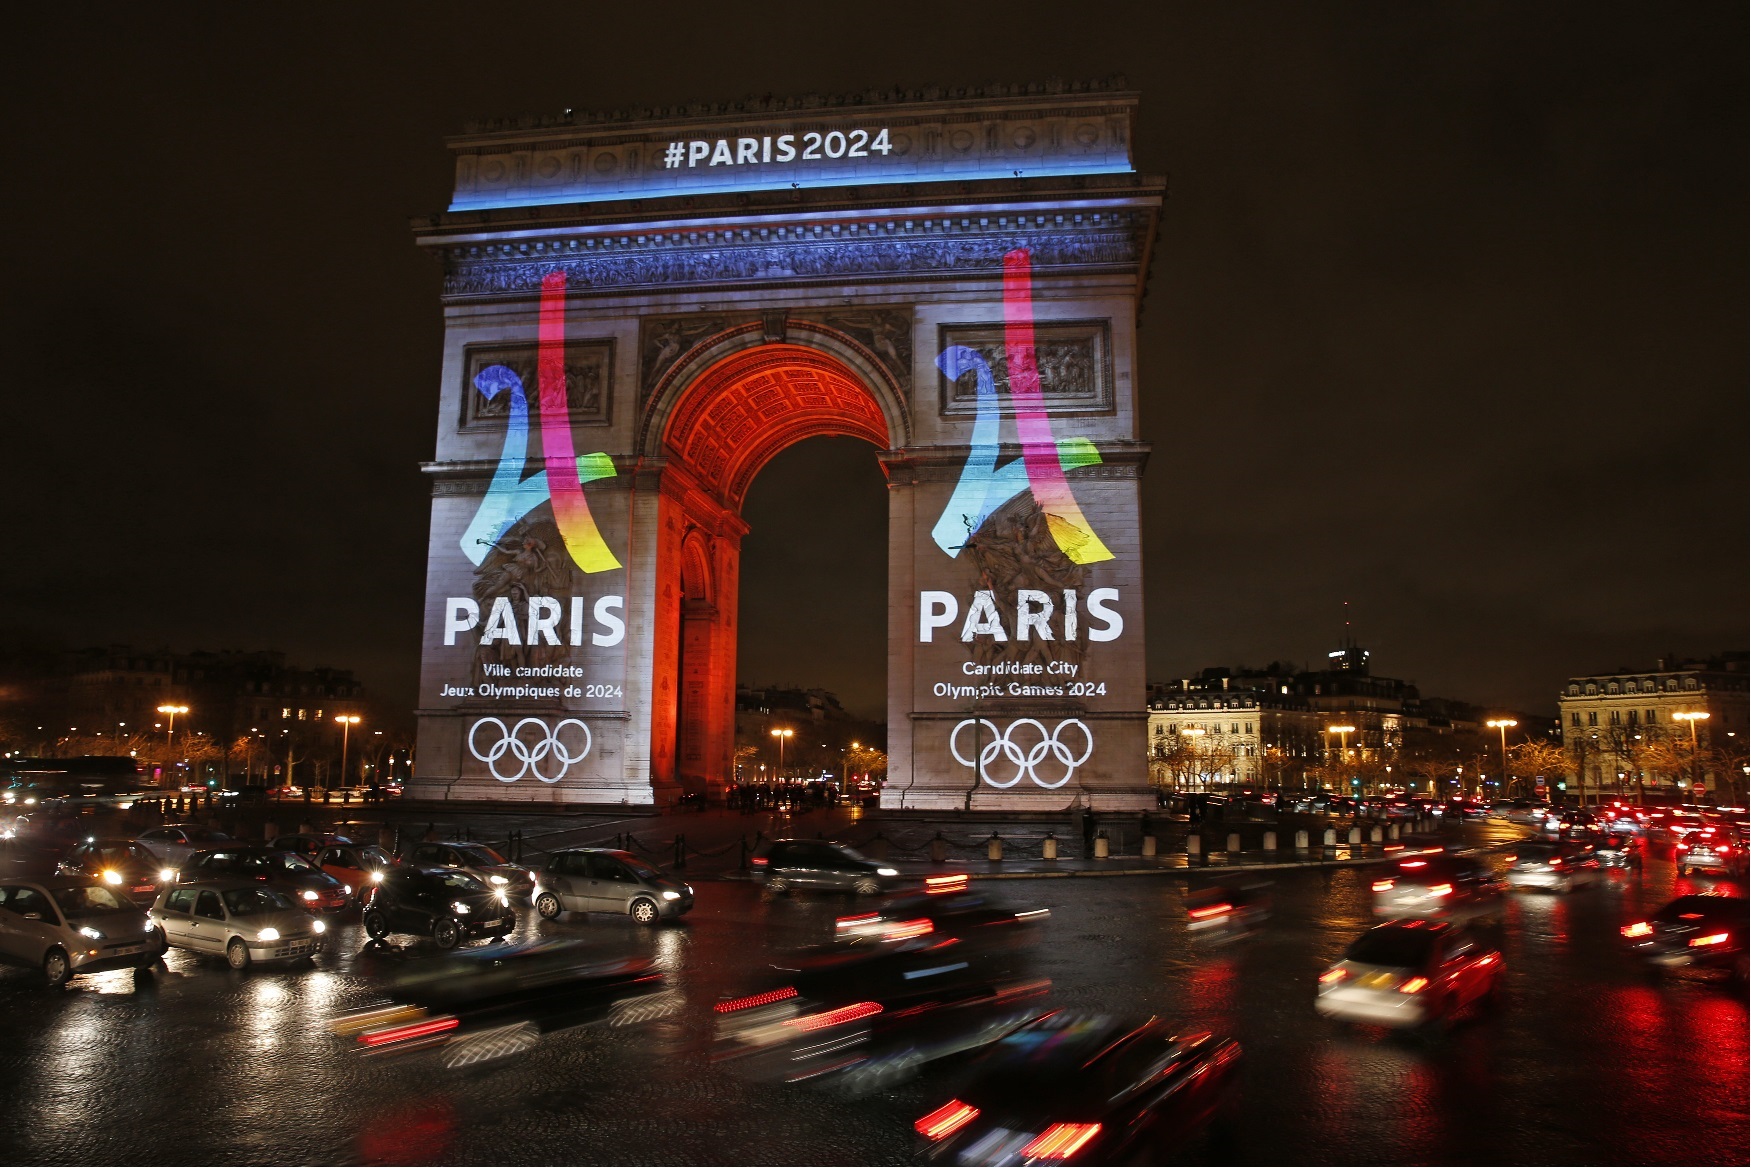 Картинки на обои 2024. Олимпийские игры в Париже 2024. Париж 2024. Олимпийский Париж 2024.